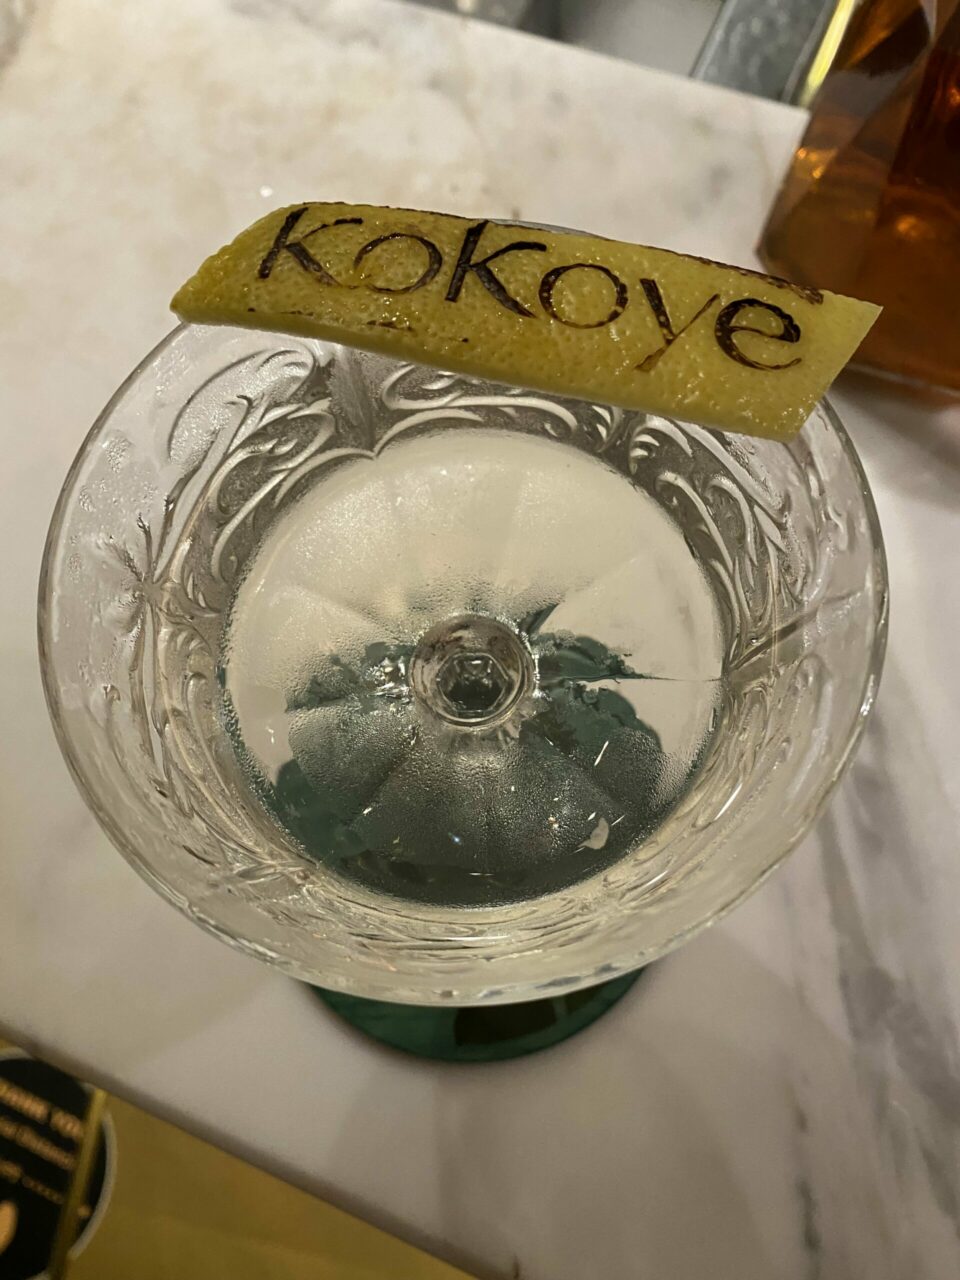 Kokoye Cocktail 